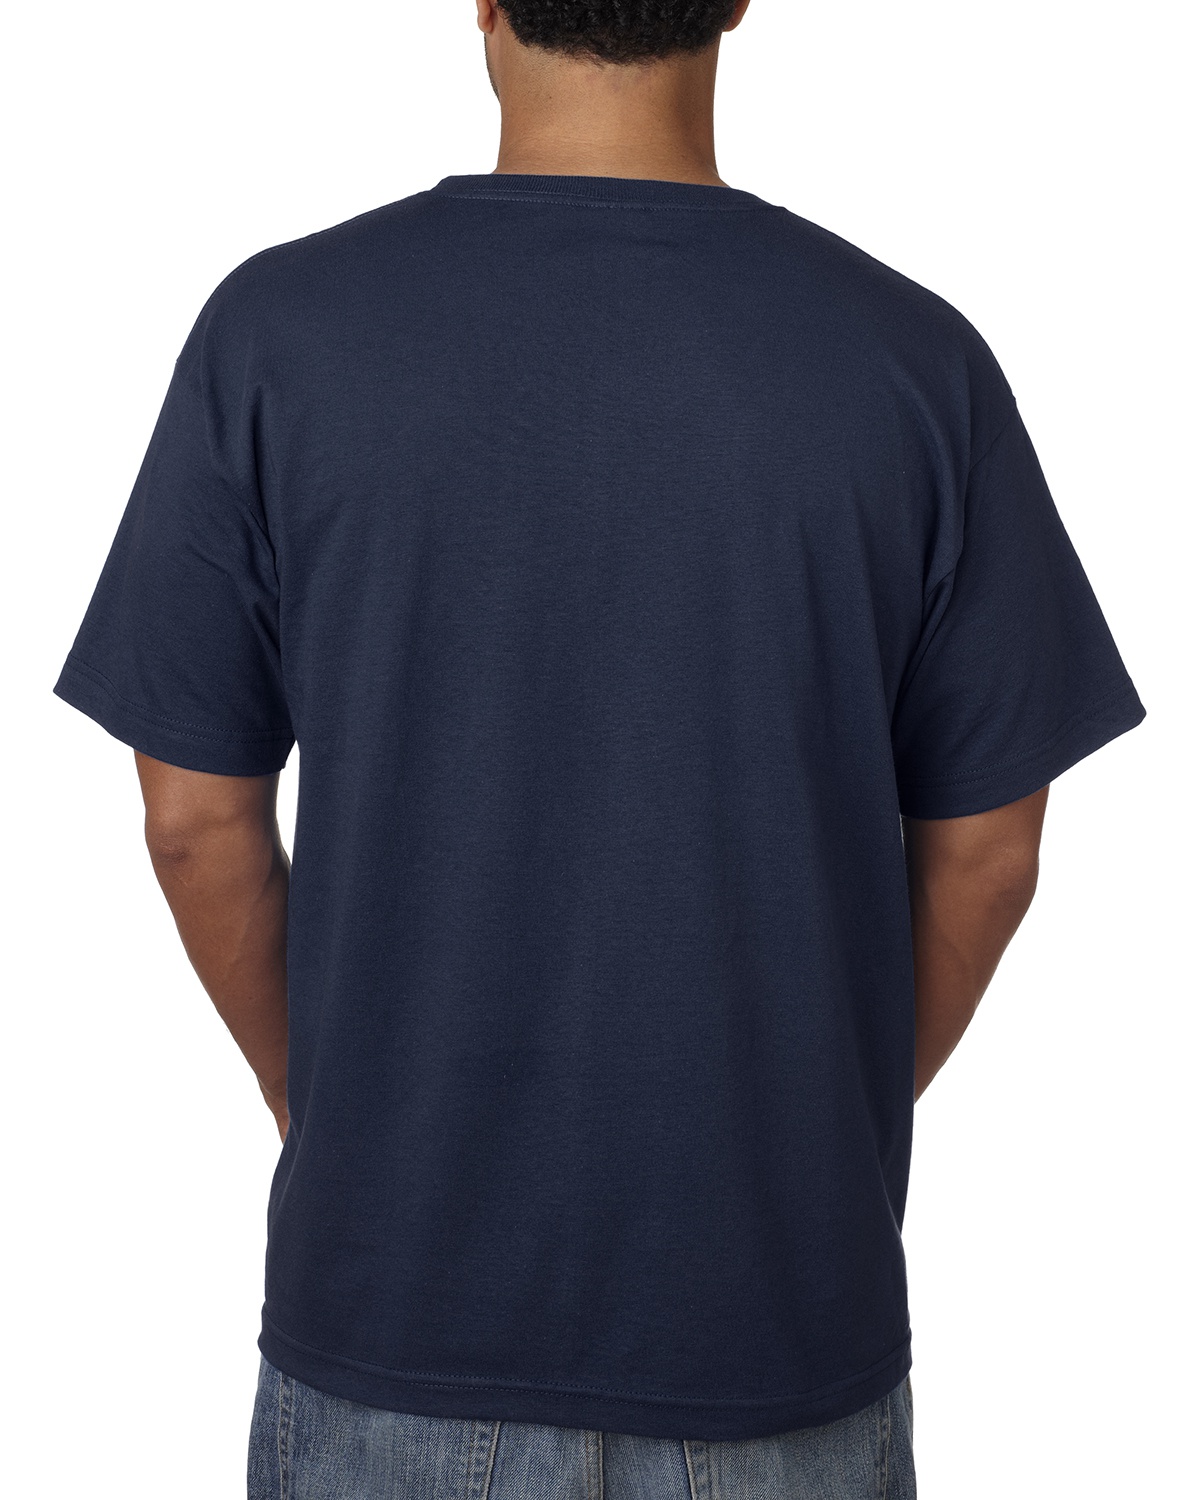 'Bayside BA5070 Adult Short-Sleeve T-Shirt with Pocket'